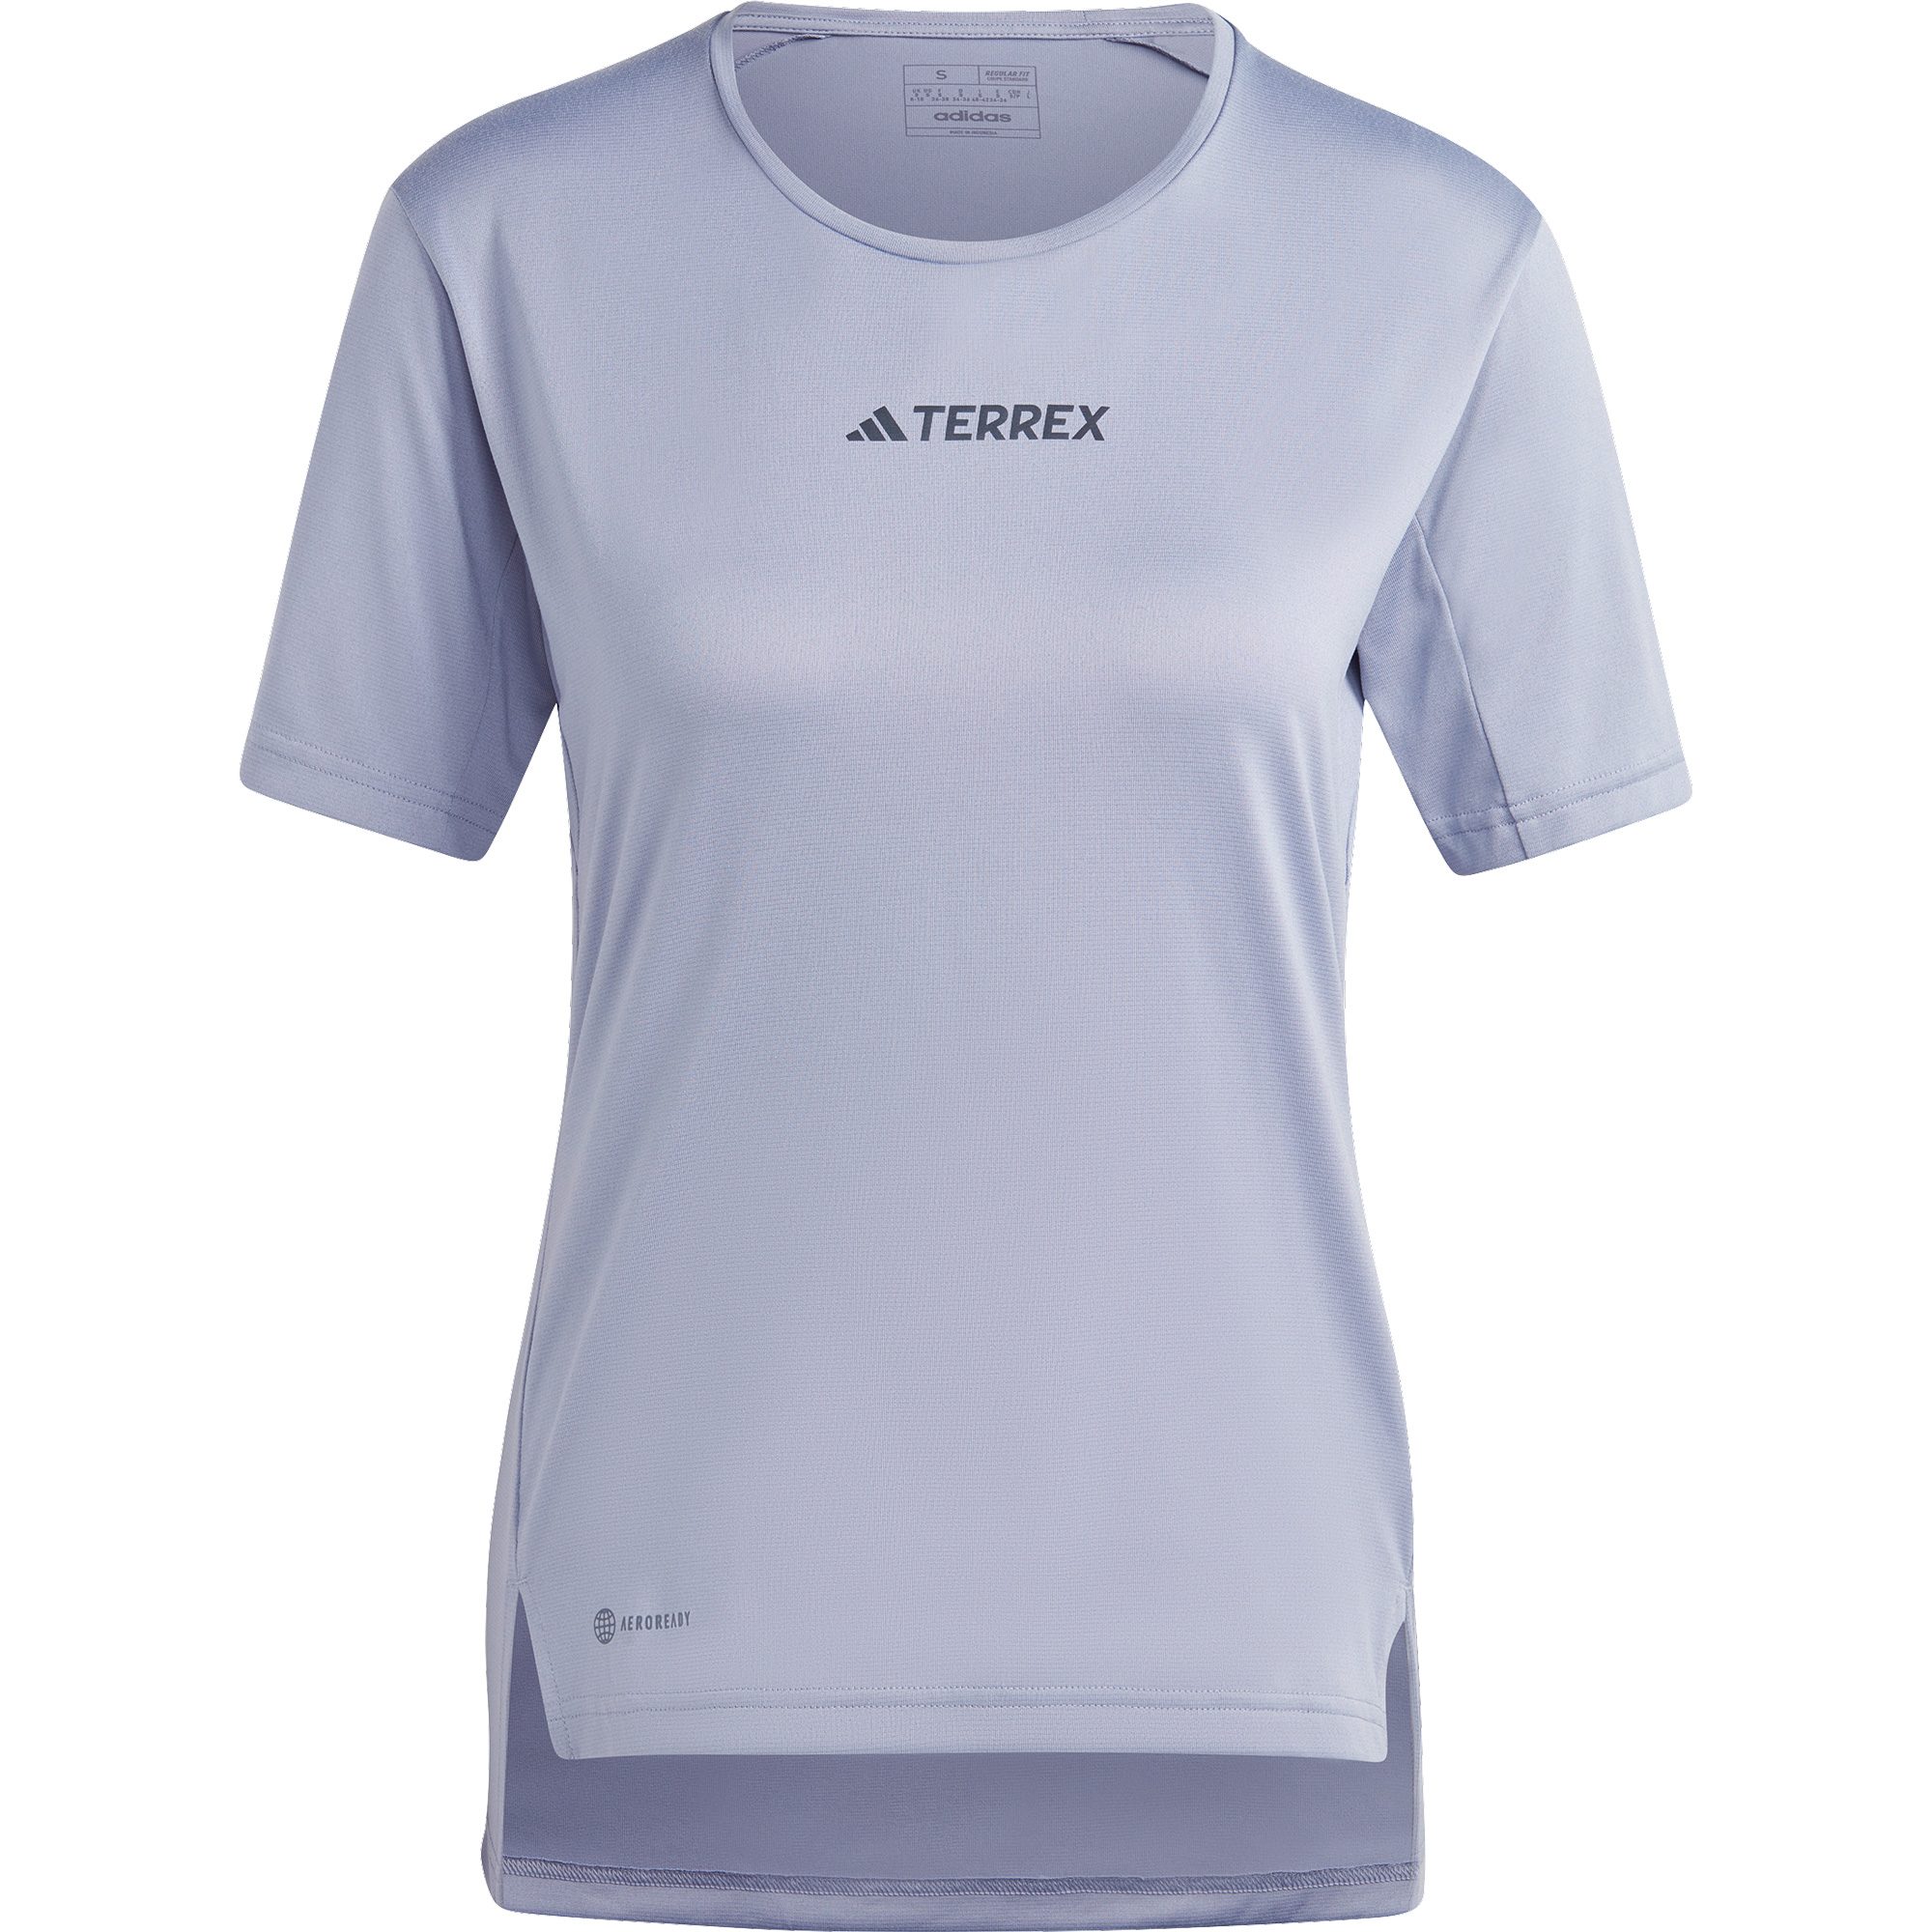 Multi at Sport TERREX silver Shop Bittl T-Shirt Women adidas violet - Terrex